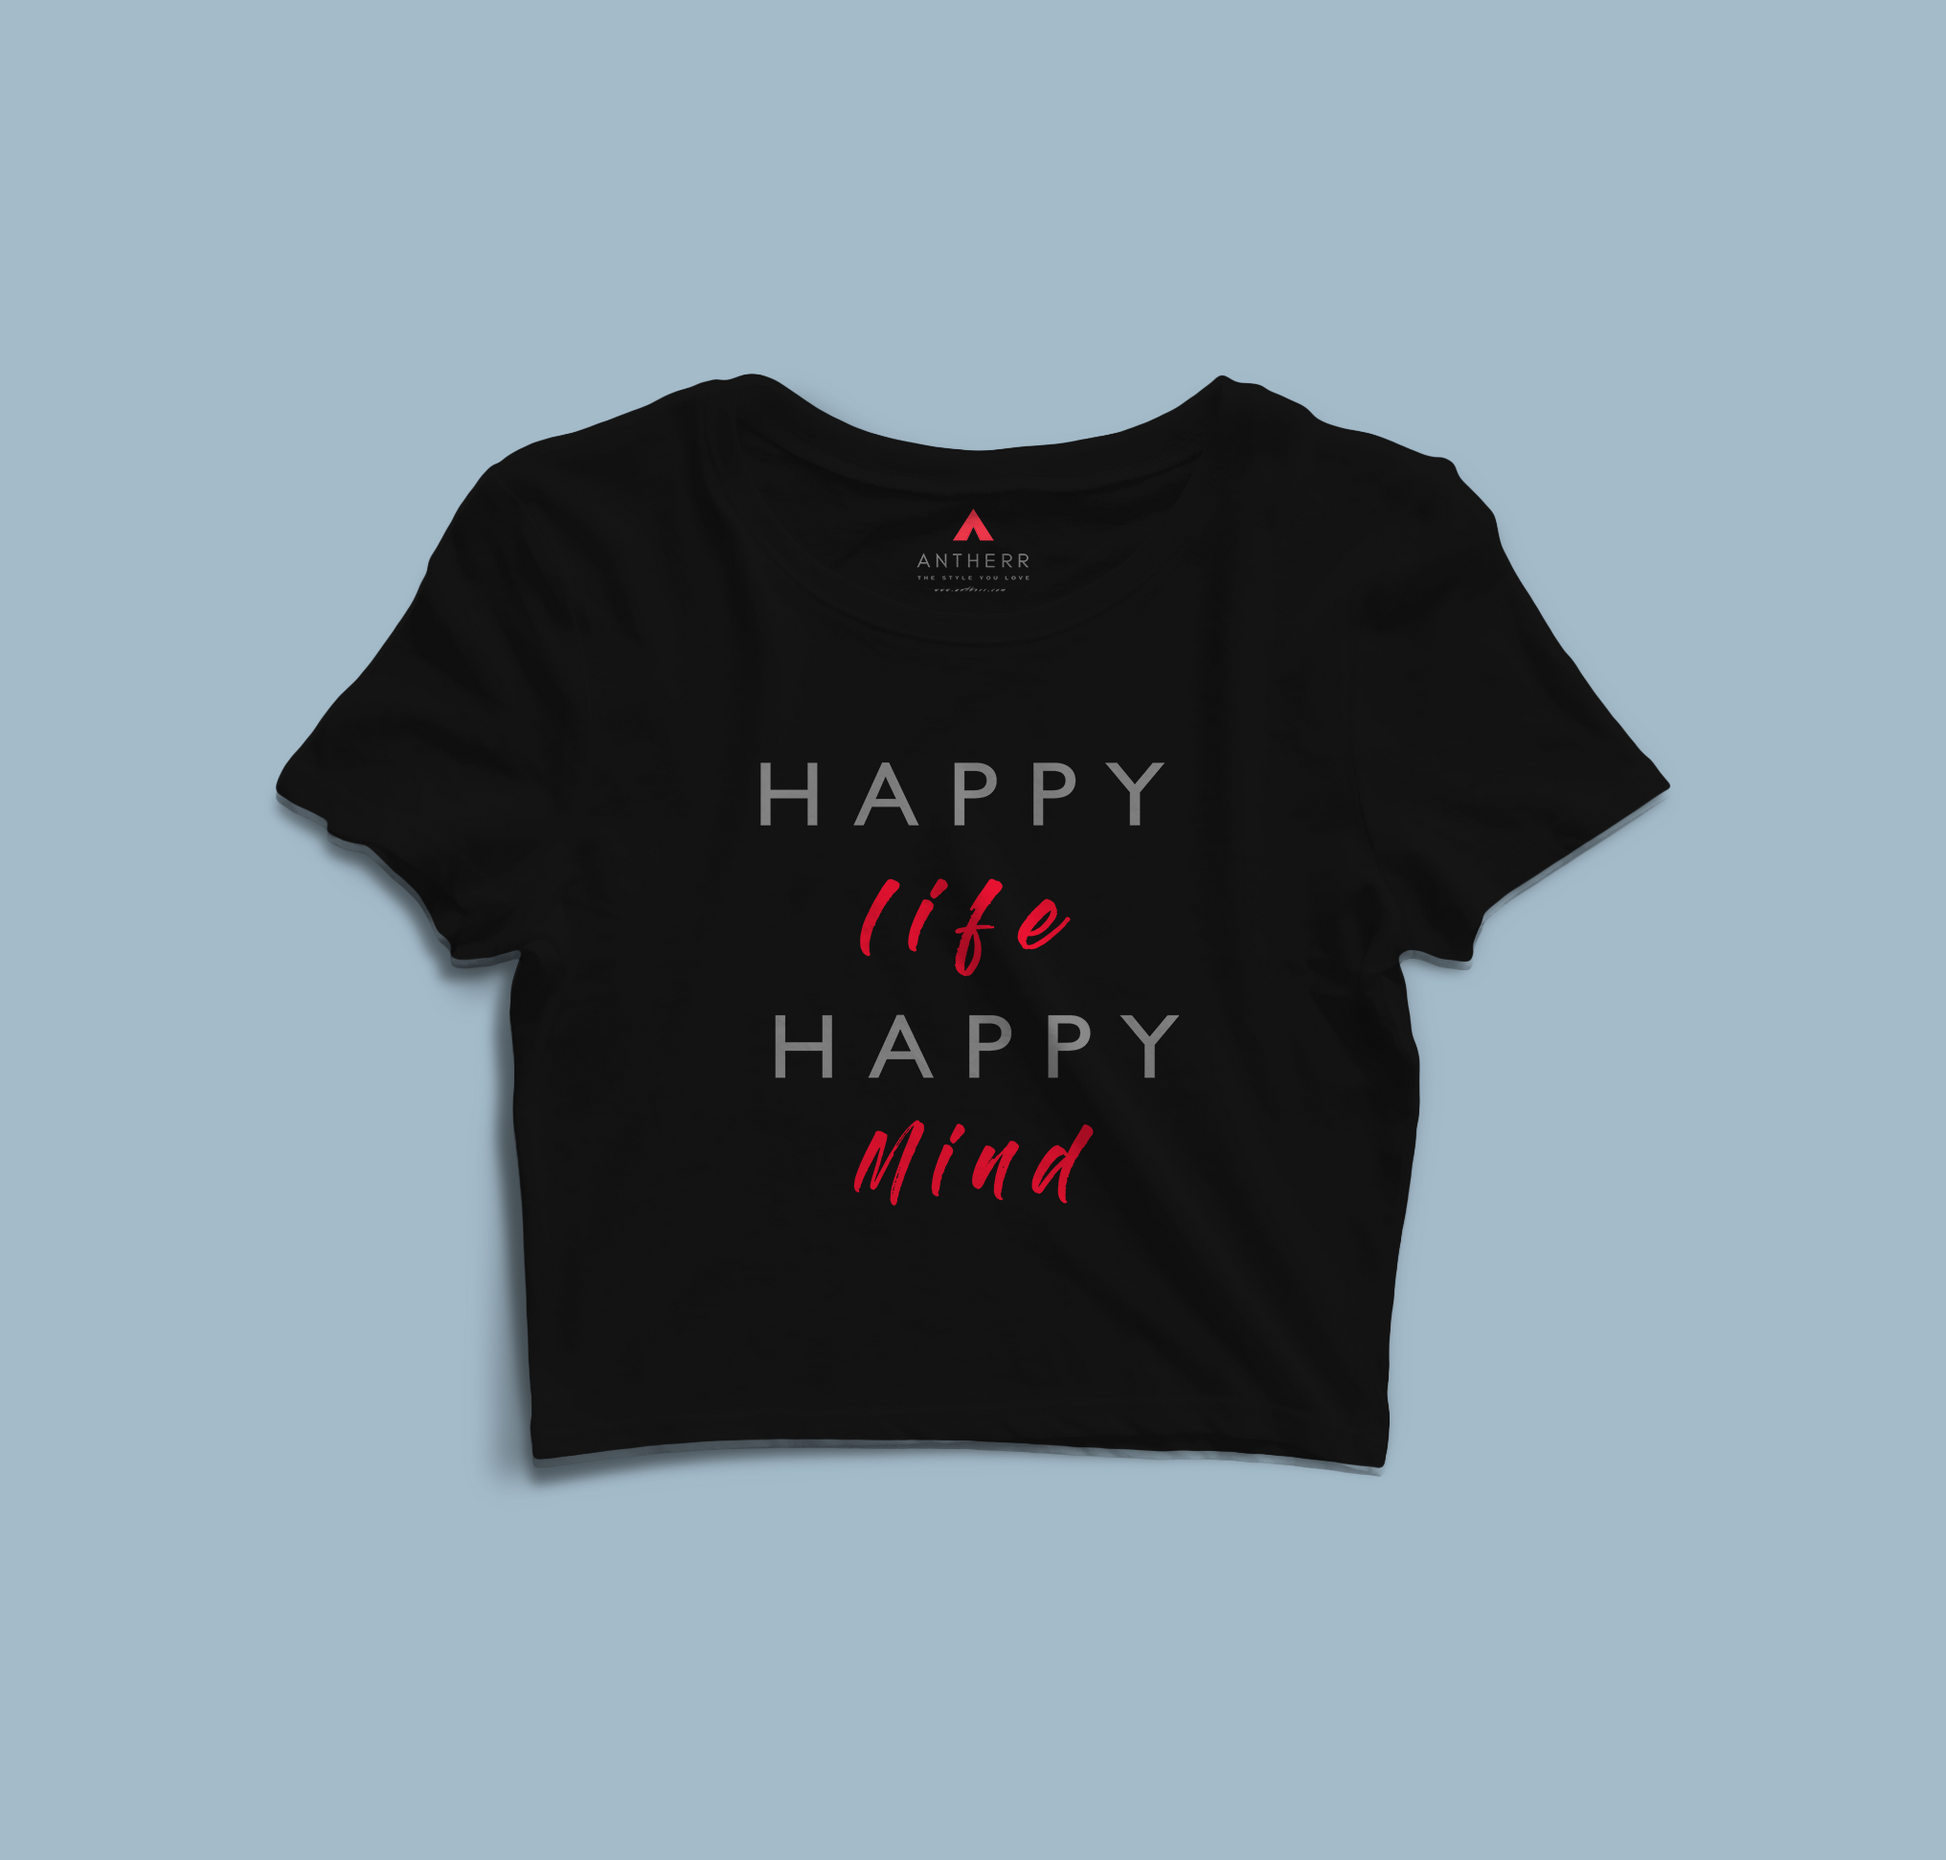 "HAPPY LIFE HAPPY MIND" - HALF-SLEEVE CROP TOPS BLACK